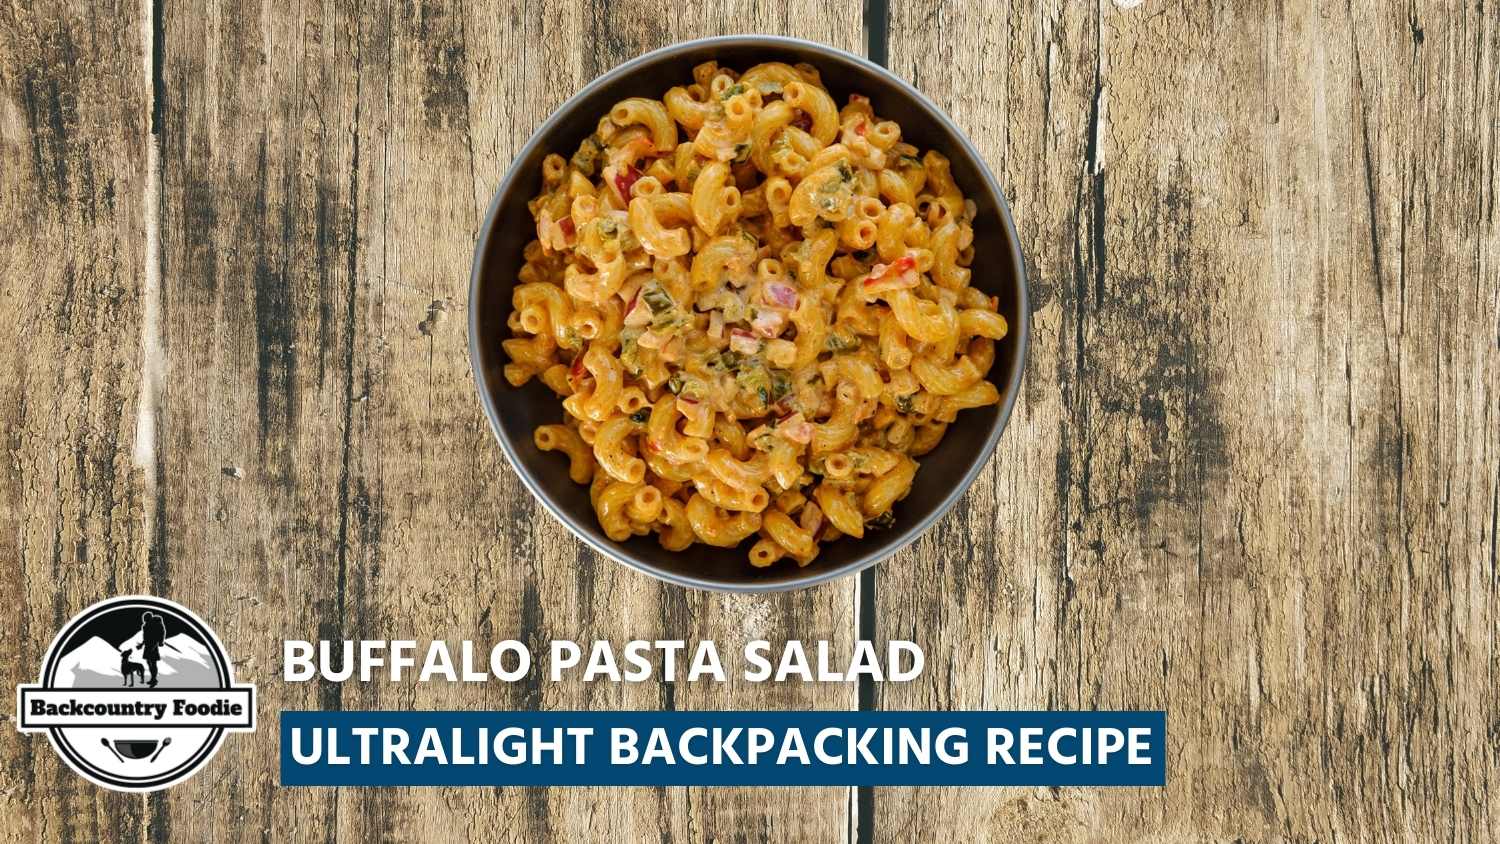 Backcountry Foodie Blog Buffalo Pasta Salad Ultralight Backpacking Recipe